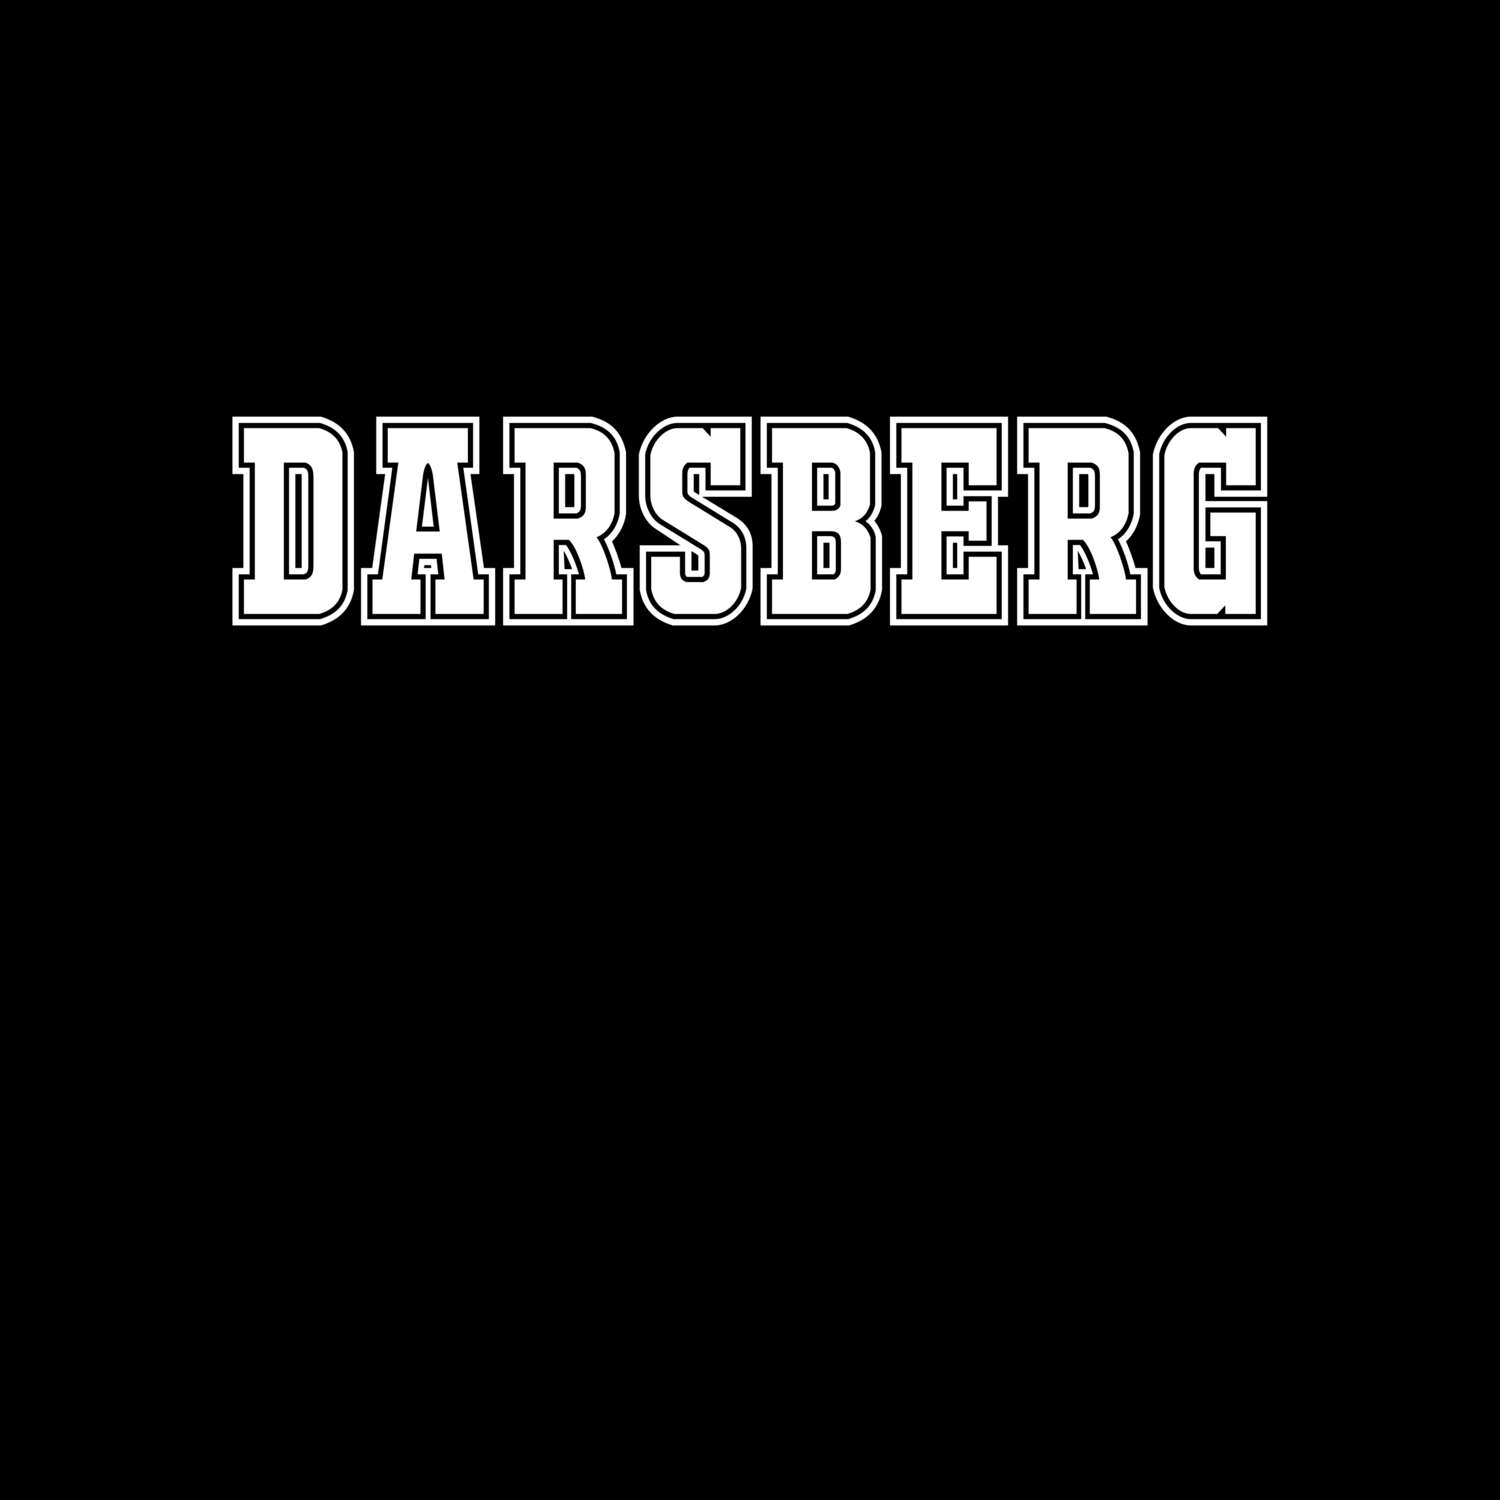 Darsberg T-Shirt »Classic«